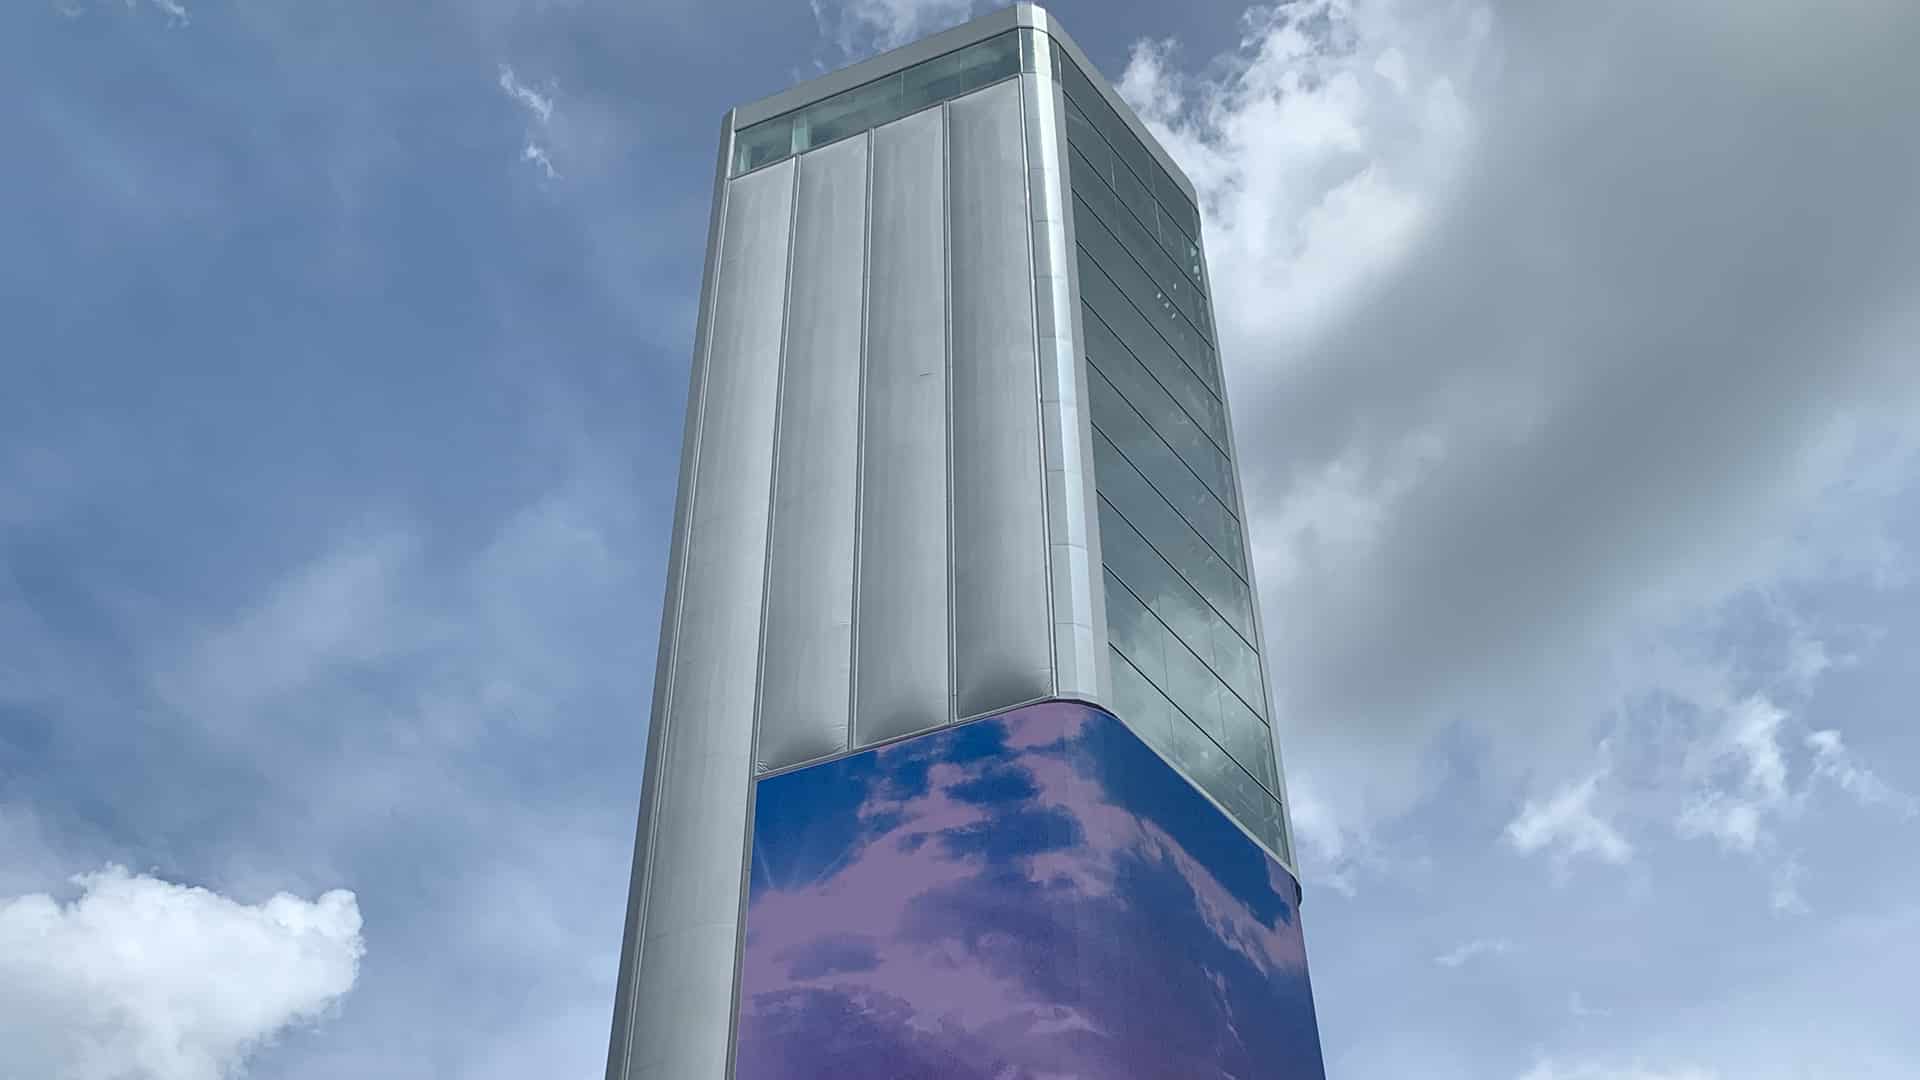   The Texlon® ETFE cladded facade features a big LED Screen.